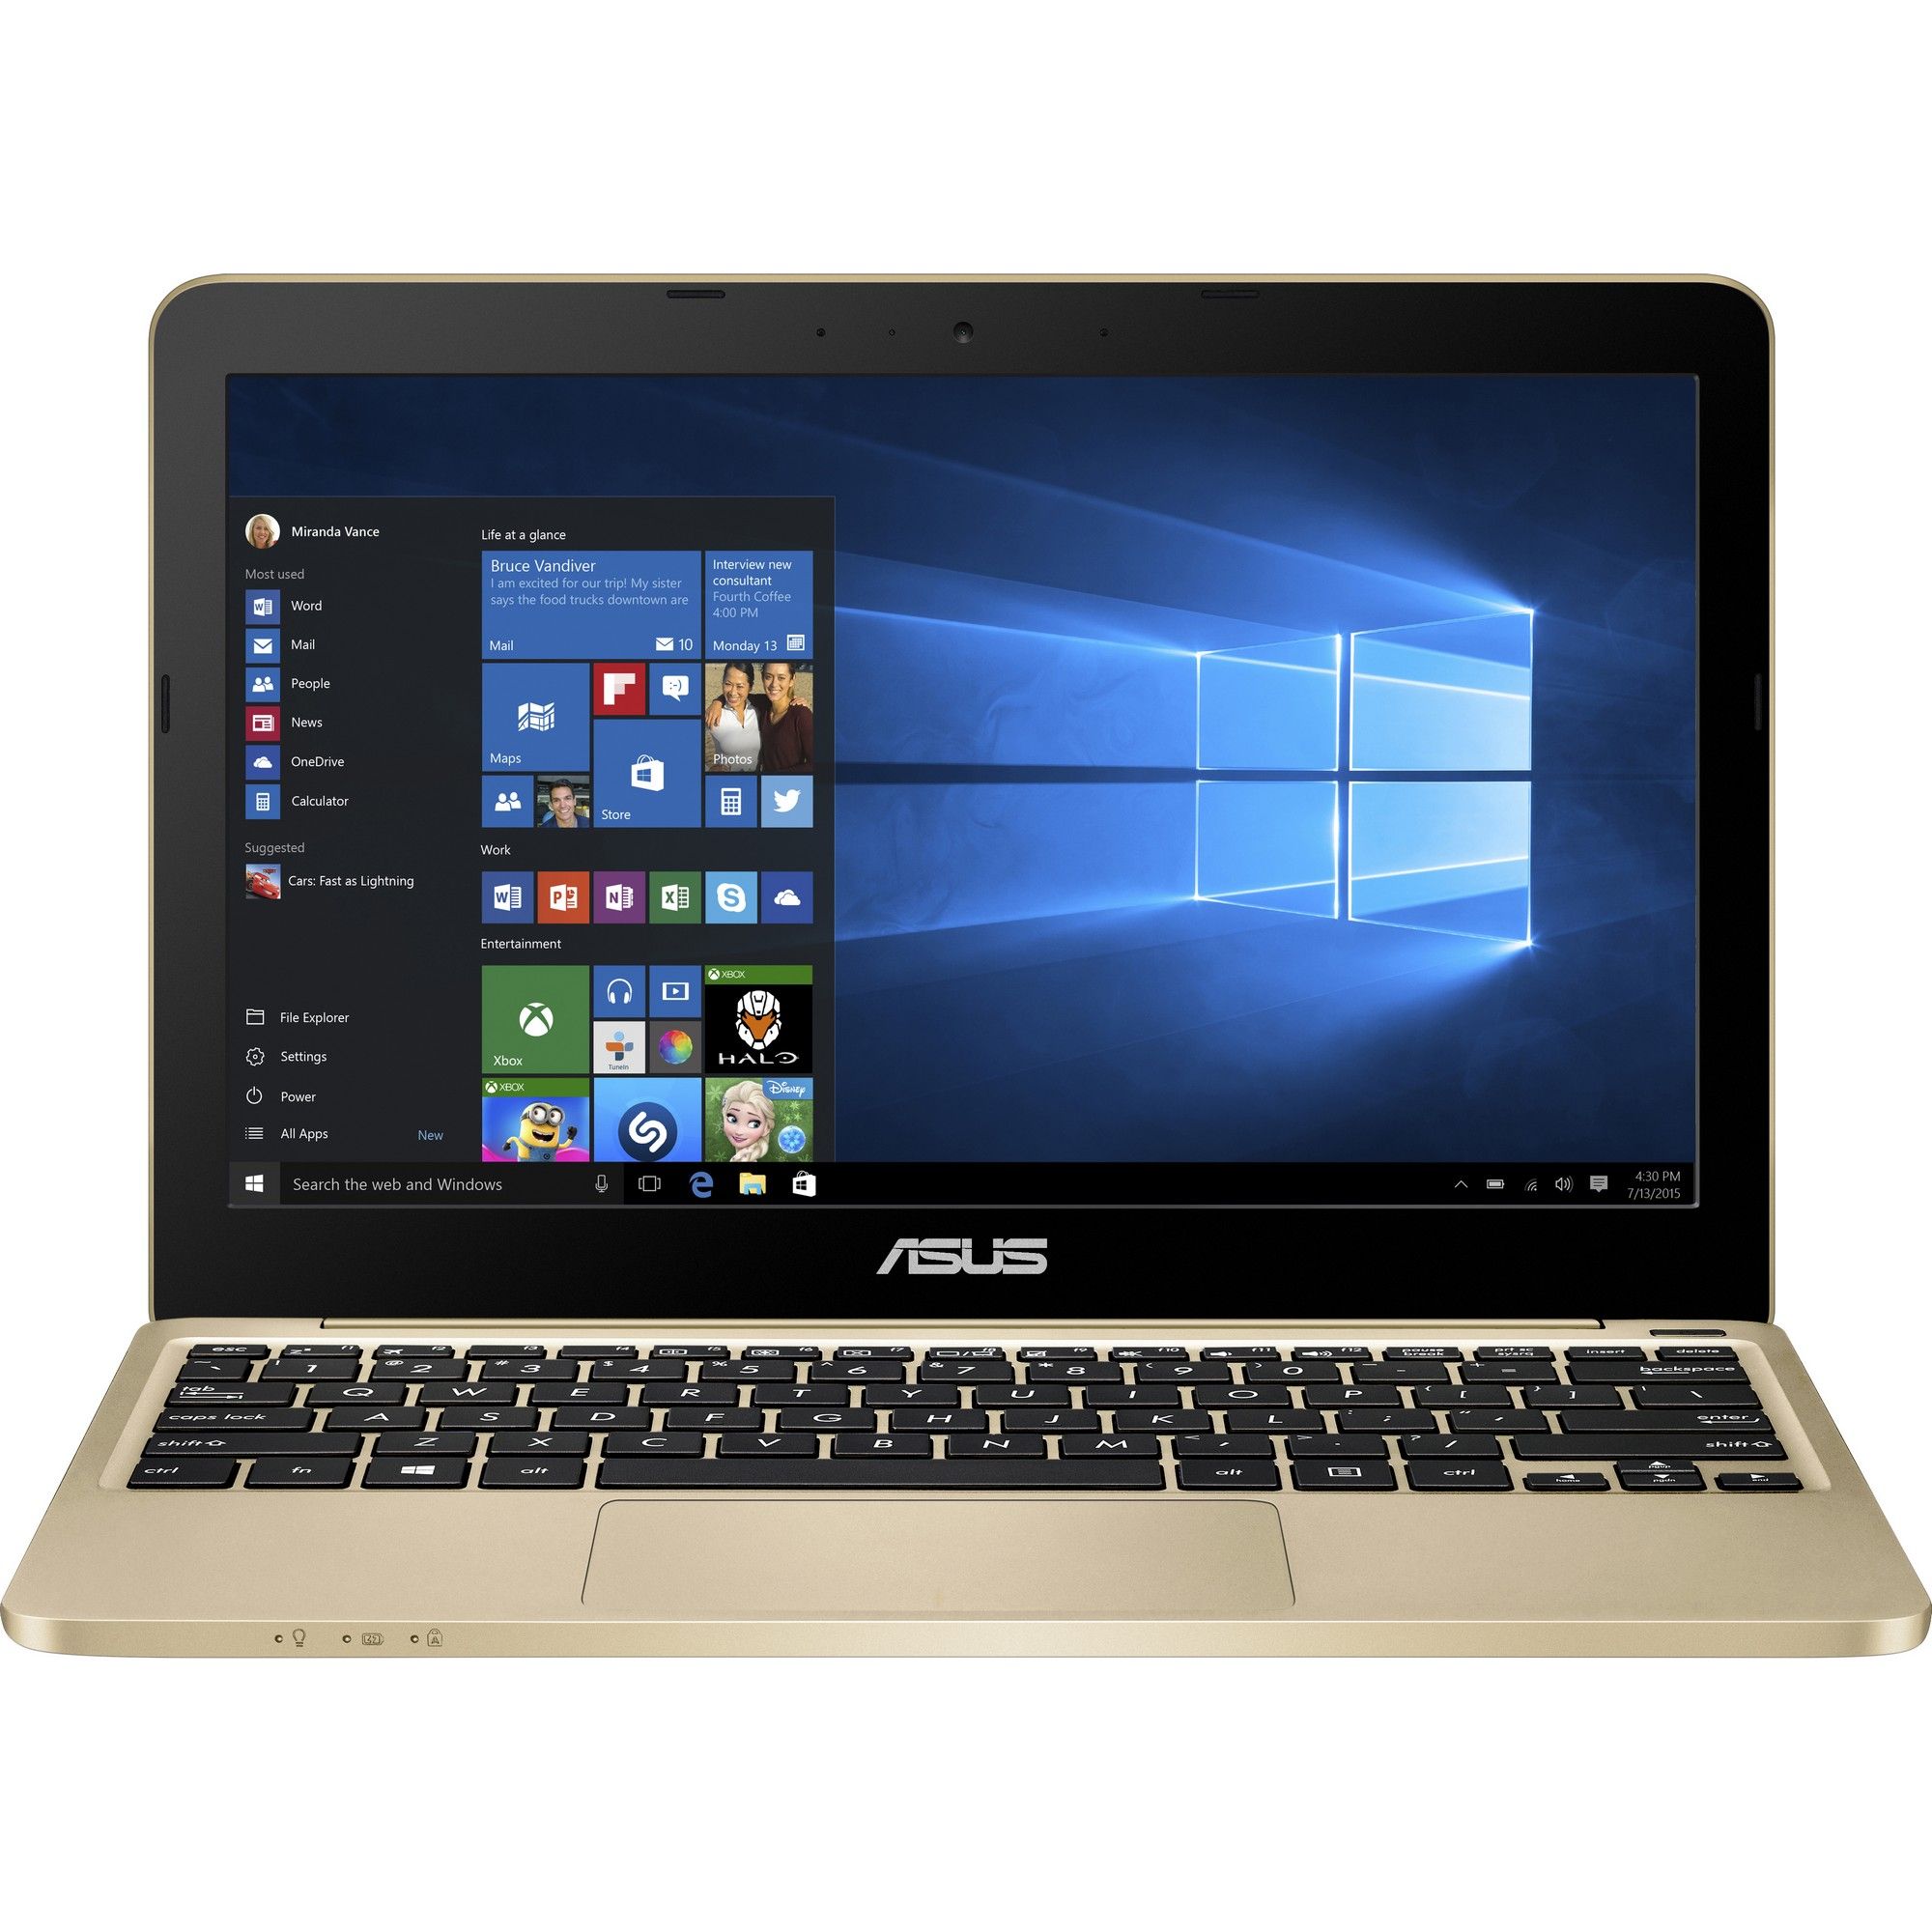 Laptop ASUS E200HA-FD0009TS, Intel Atom x5-Z8300, 2GB DDR3, eMMC 32GB, Intel HD Graphics, Windows 10 Home